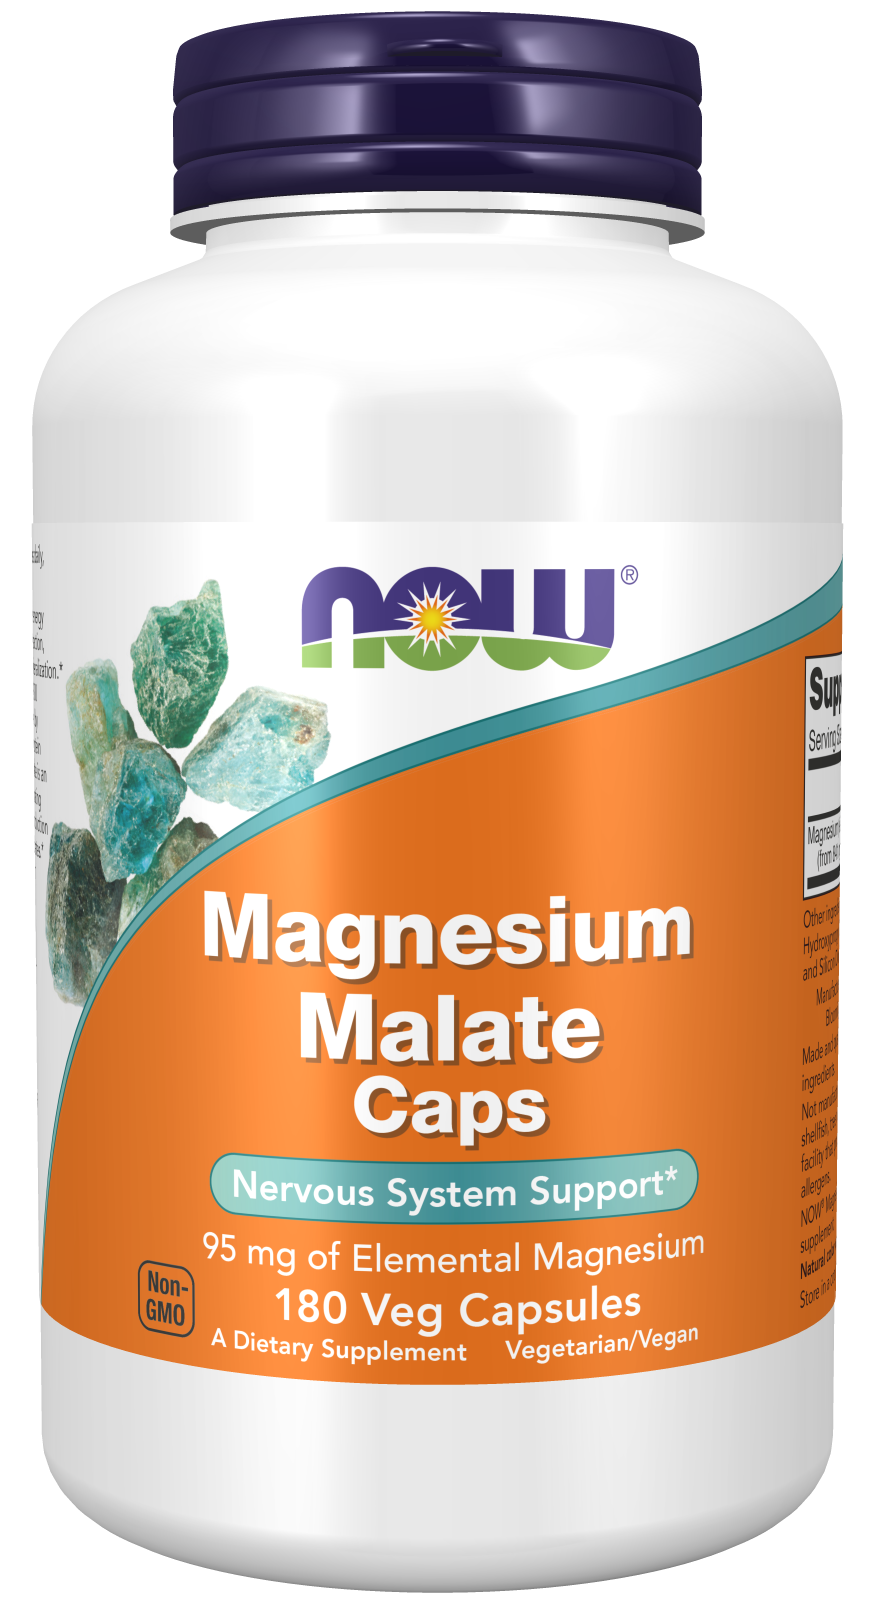 Magnesium Malate Caps - 180 Veg Capsules Bottle Front